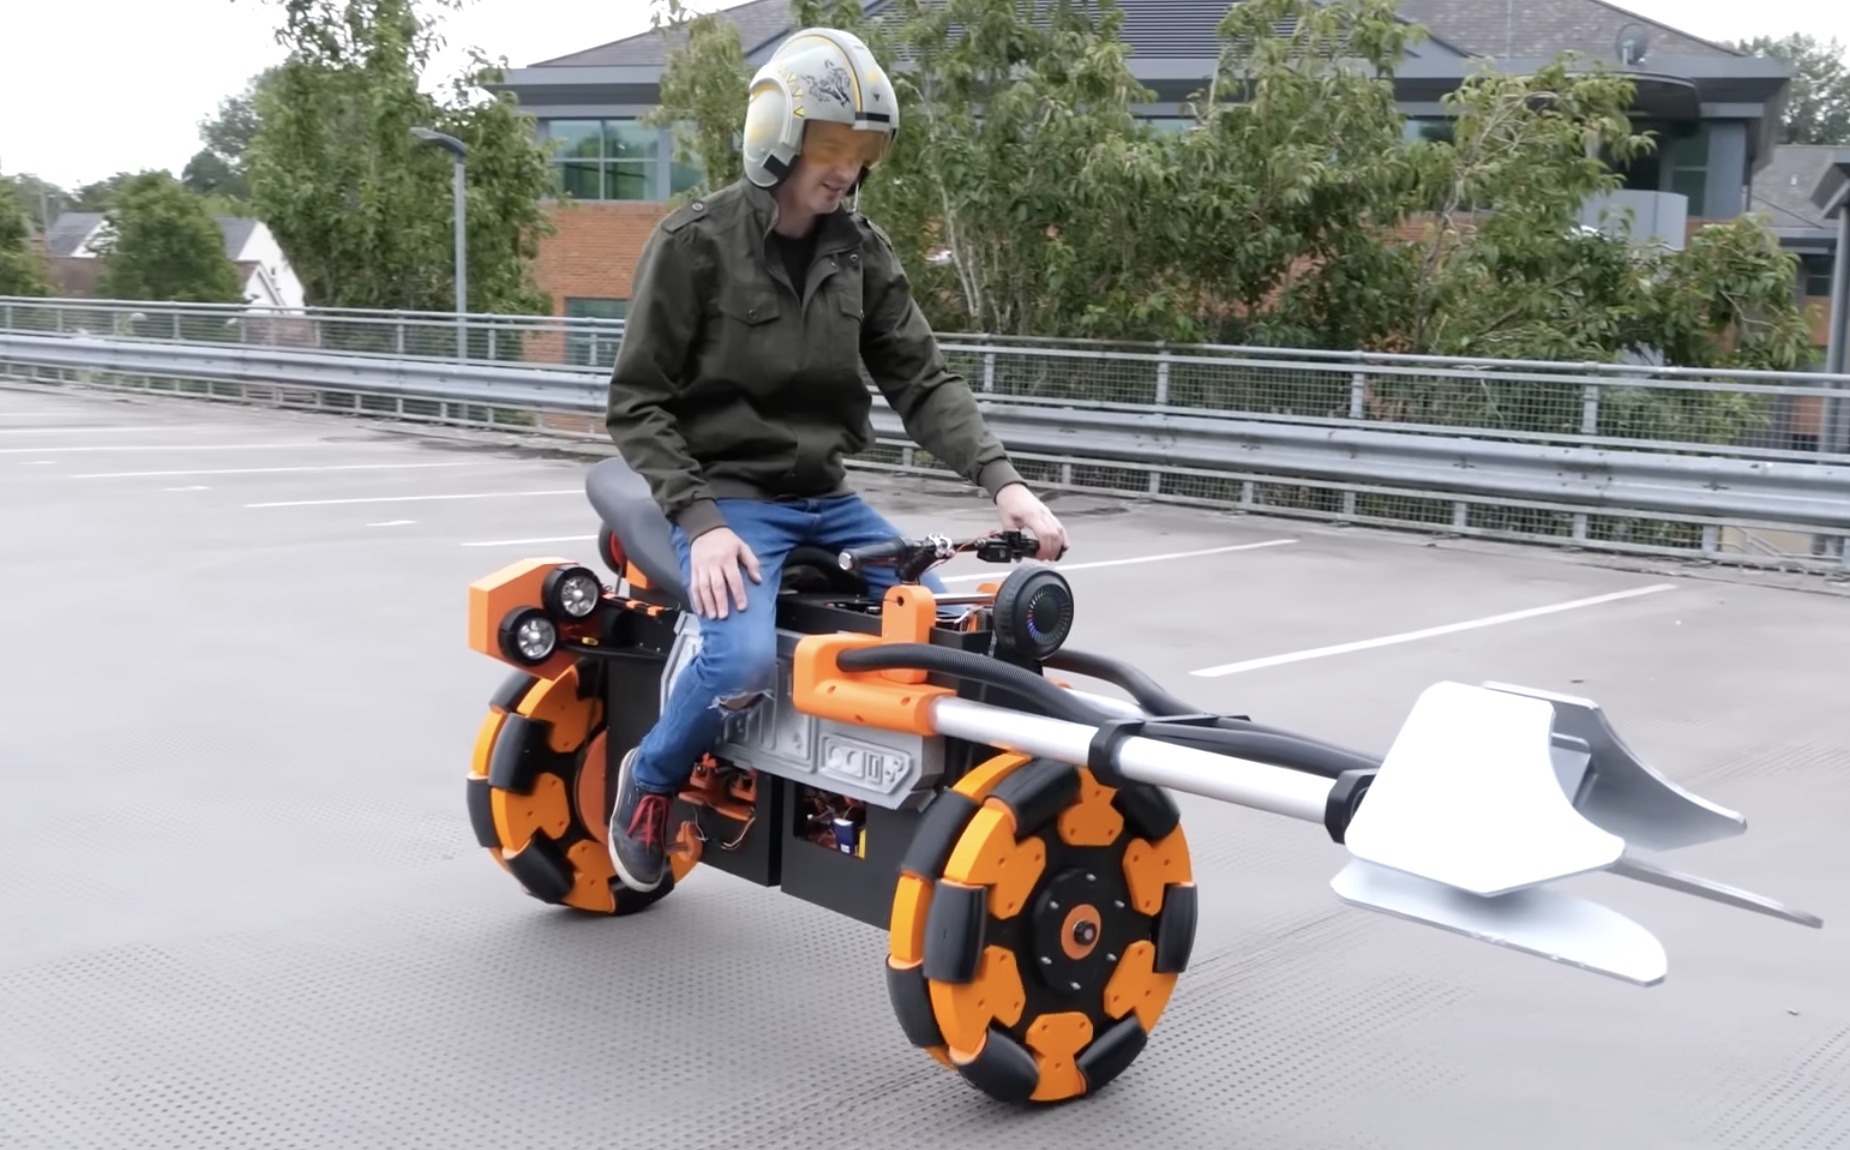 Jet-powered Star Wars speeder bike built from repurposed hoverboard